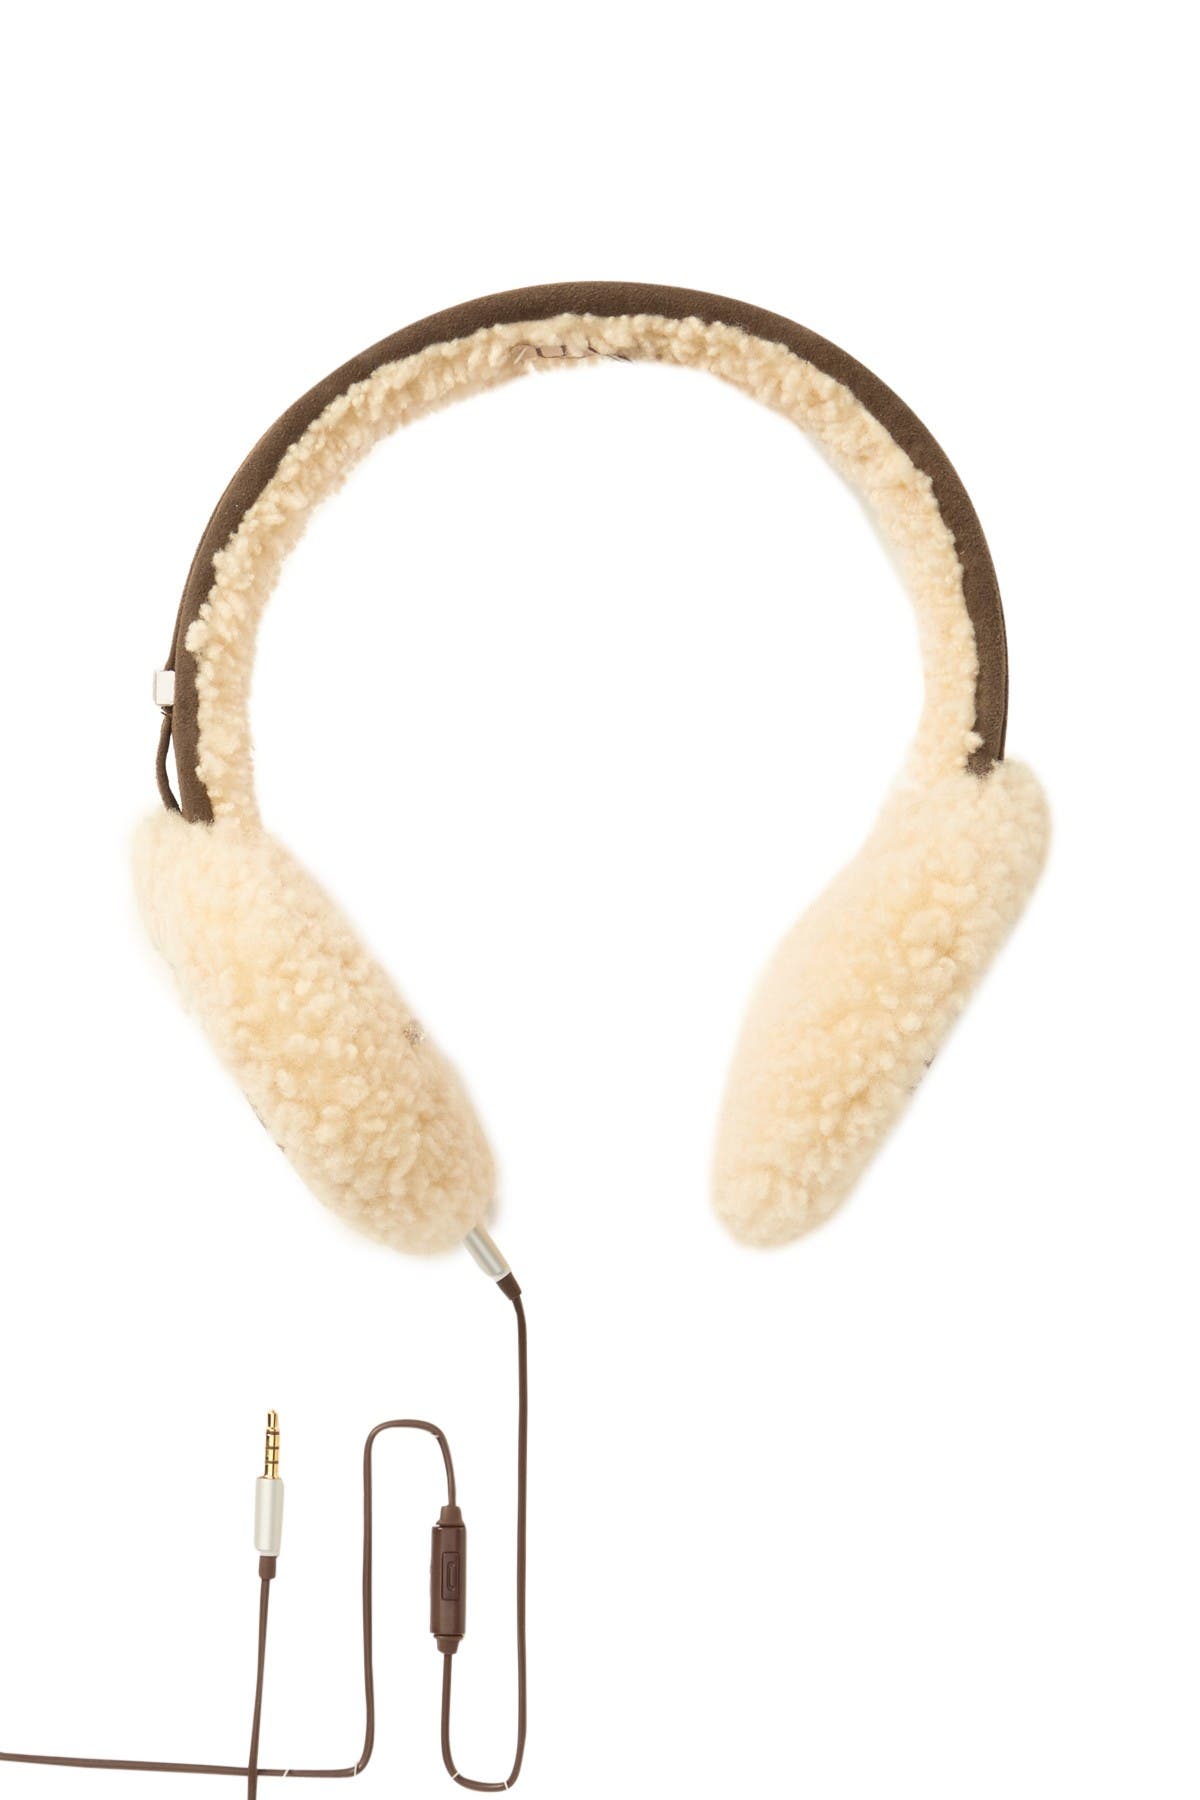 ugg earmuff headphones